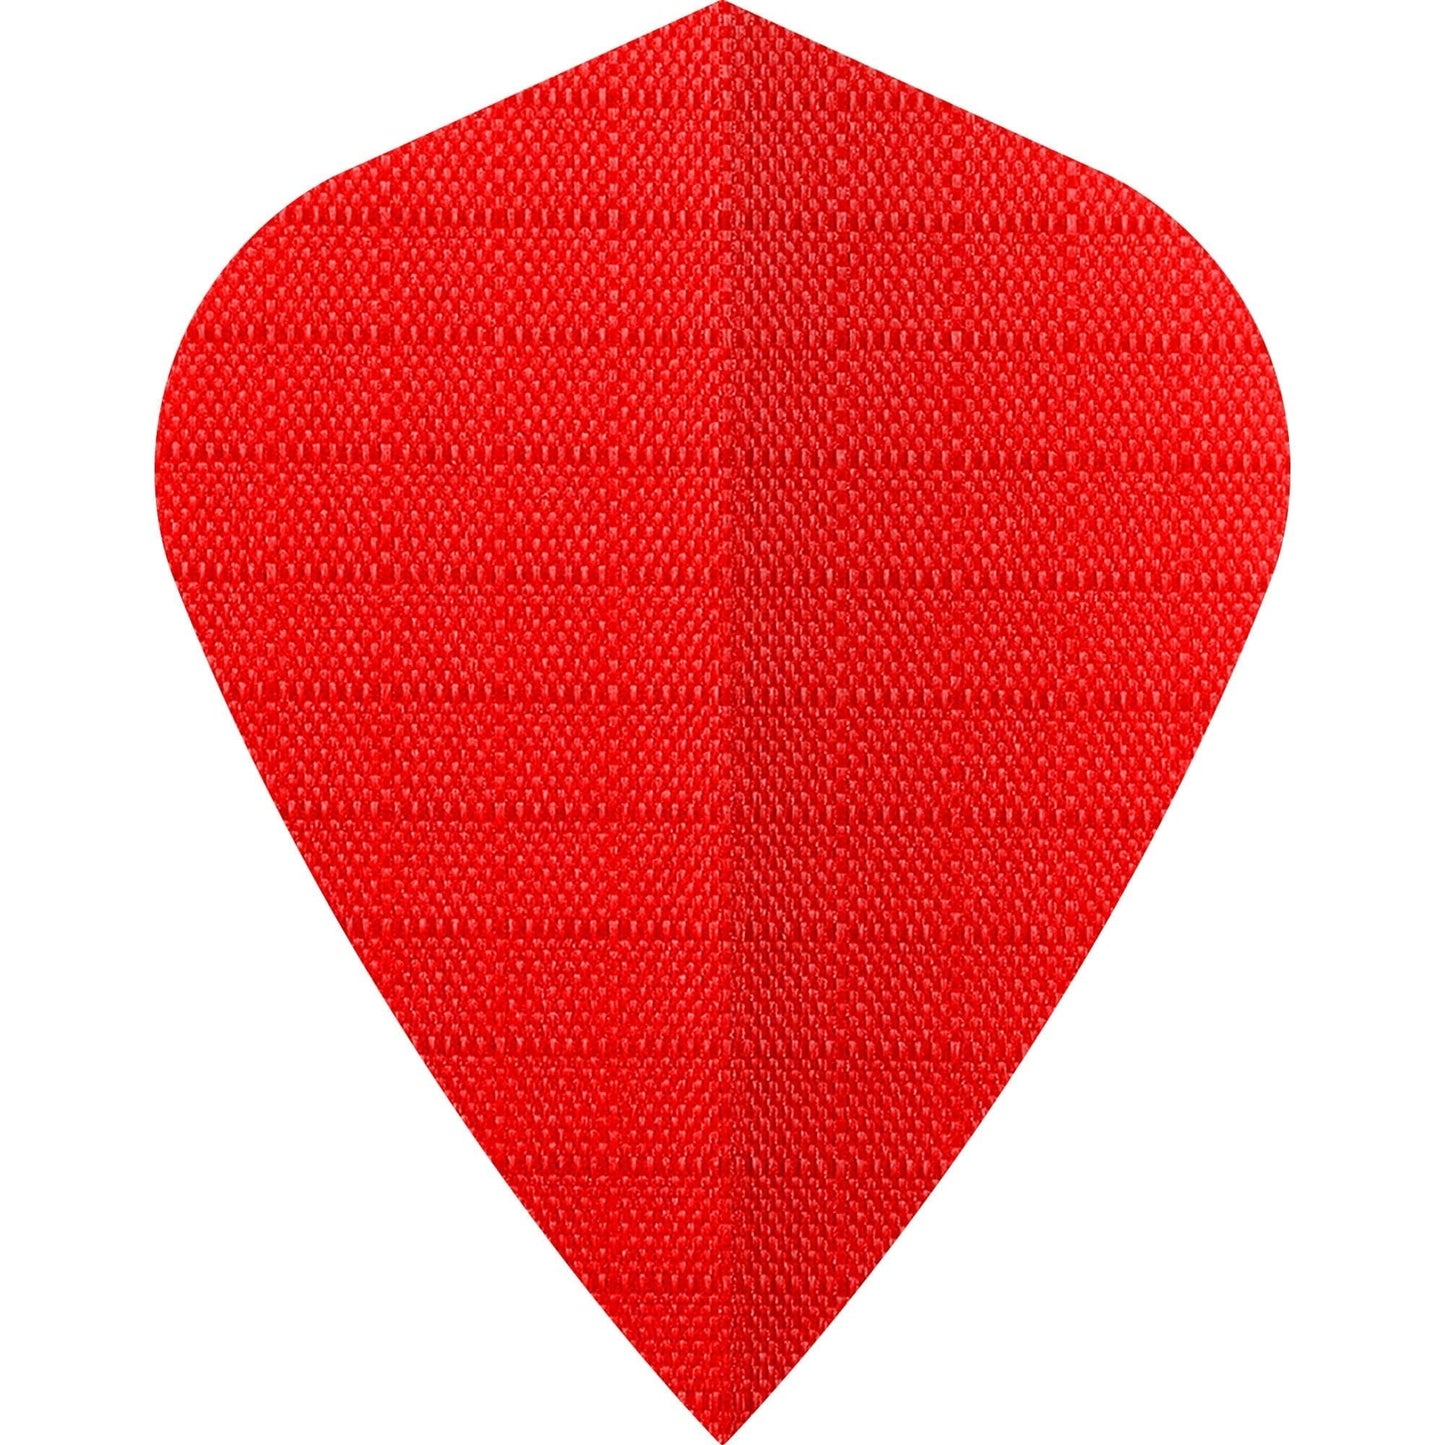 *Designa Dart Flights - Fabric Rip Stop Nylon - Longlife - Kite Red